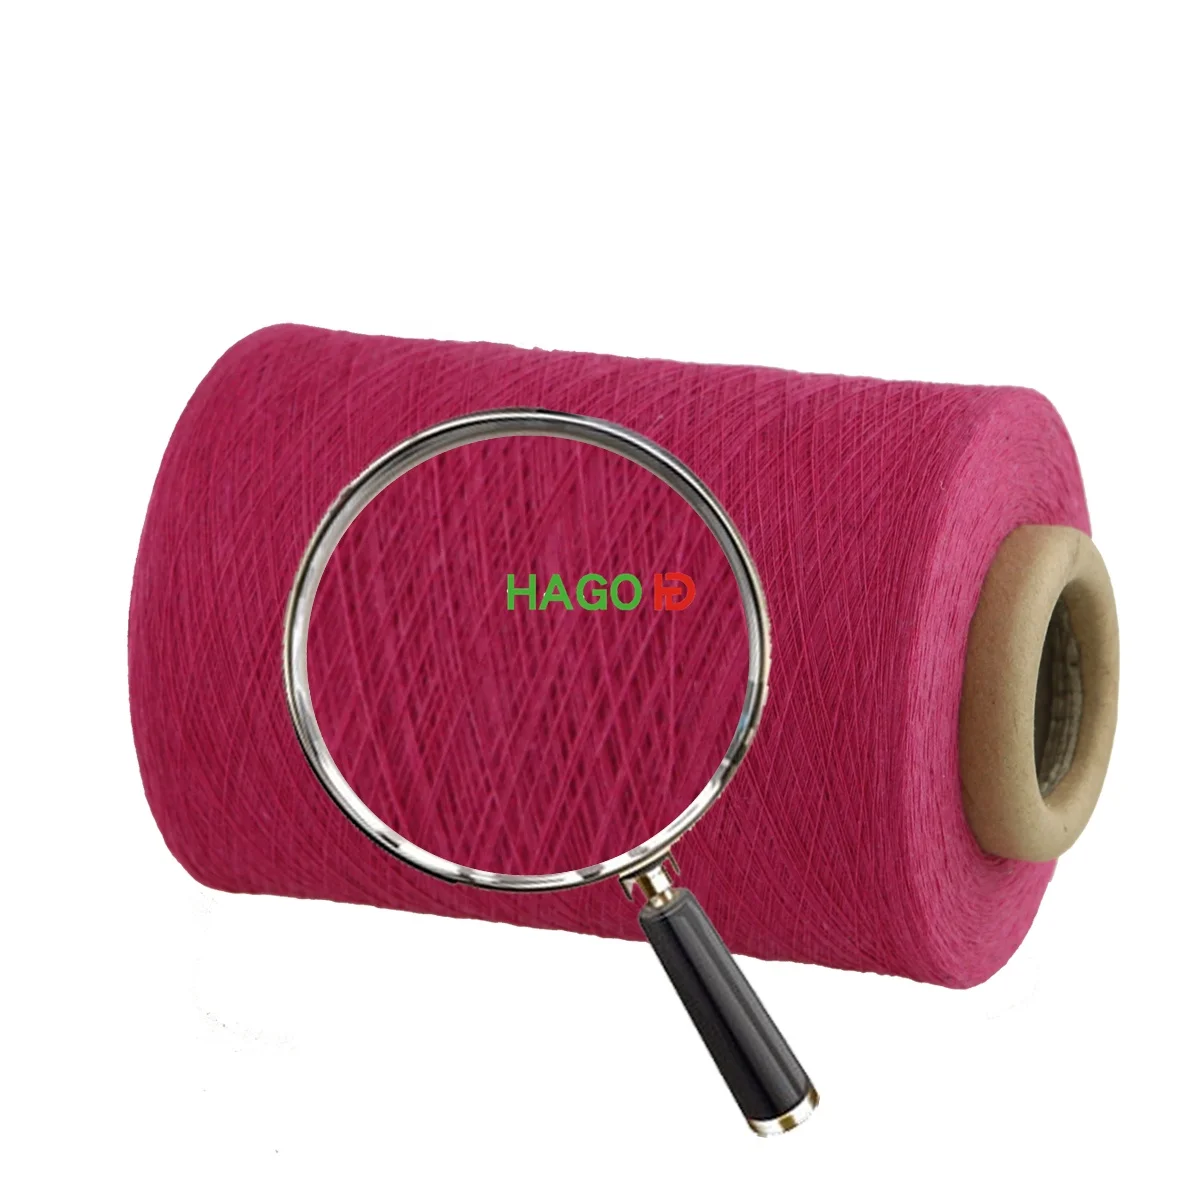 
Hago 300D DTY Microfiber Polyester Mop yarn for Mop Head 